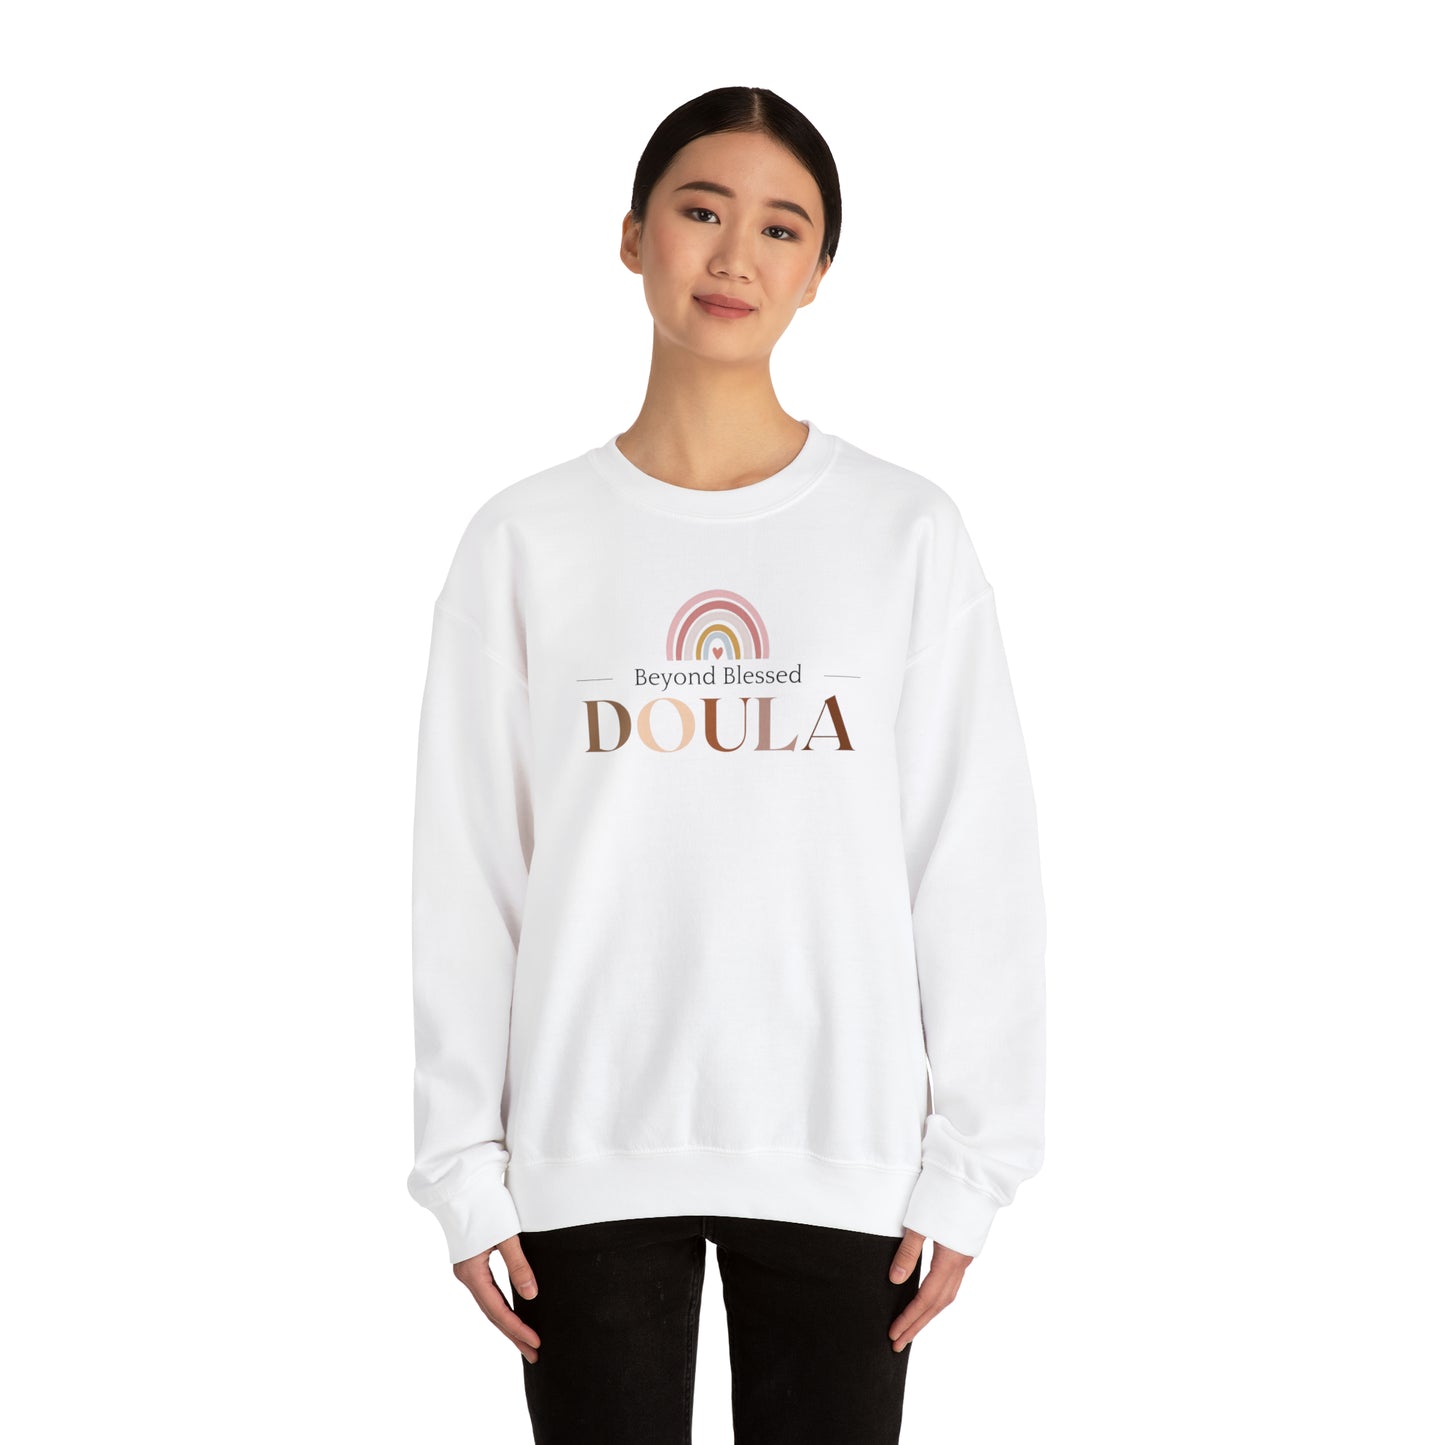 Beyond Blessed Doula - Crewneck Sweatshirt